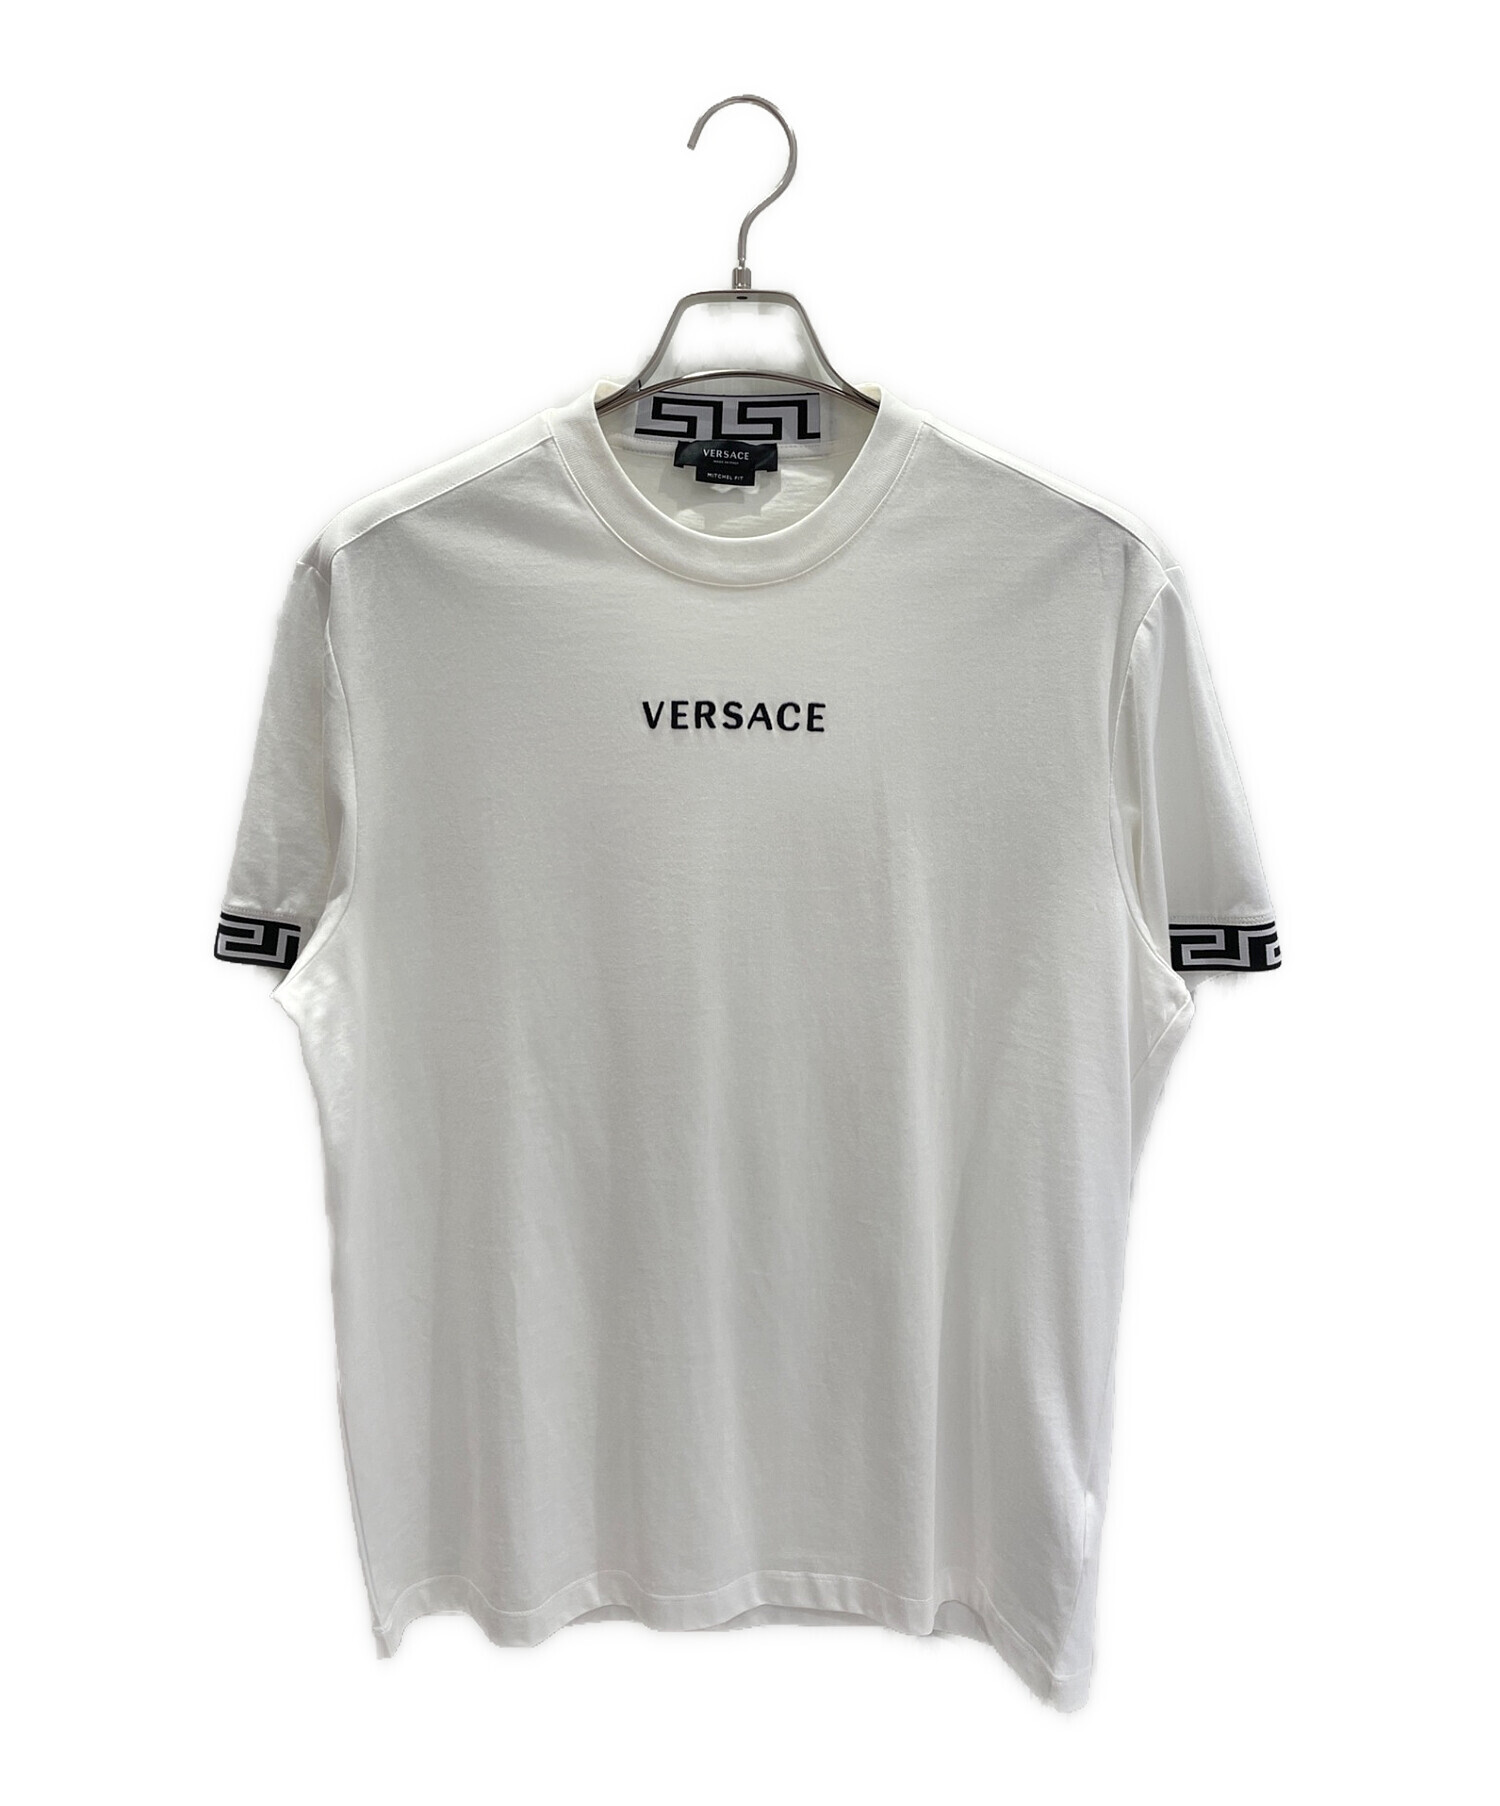 VERSACE (ヴェルサーチ) ロゴTシャツ ホワイト サイズ:S